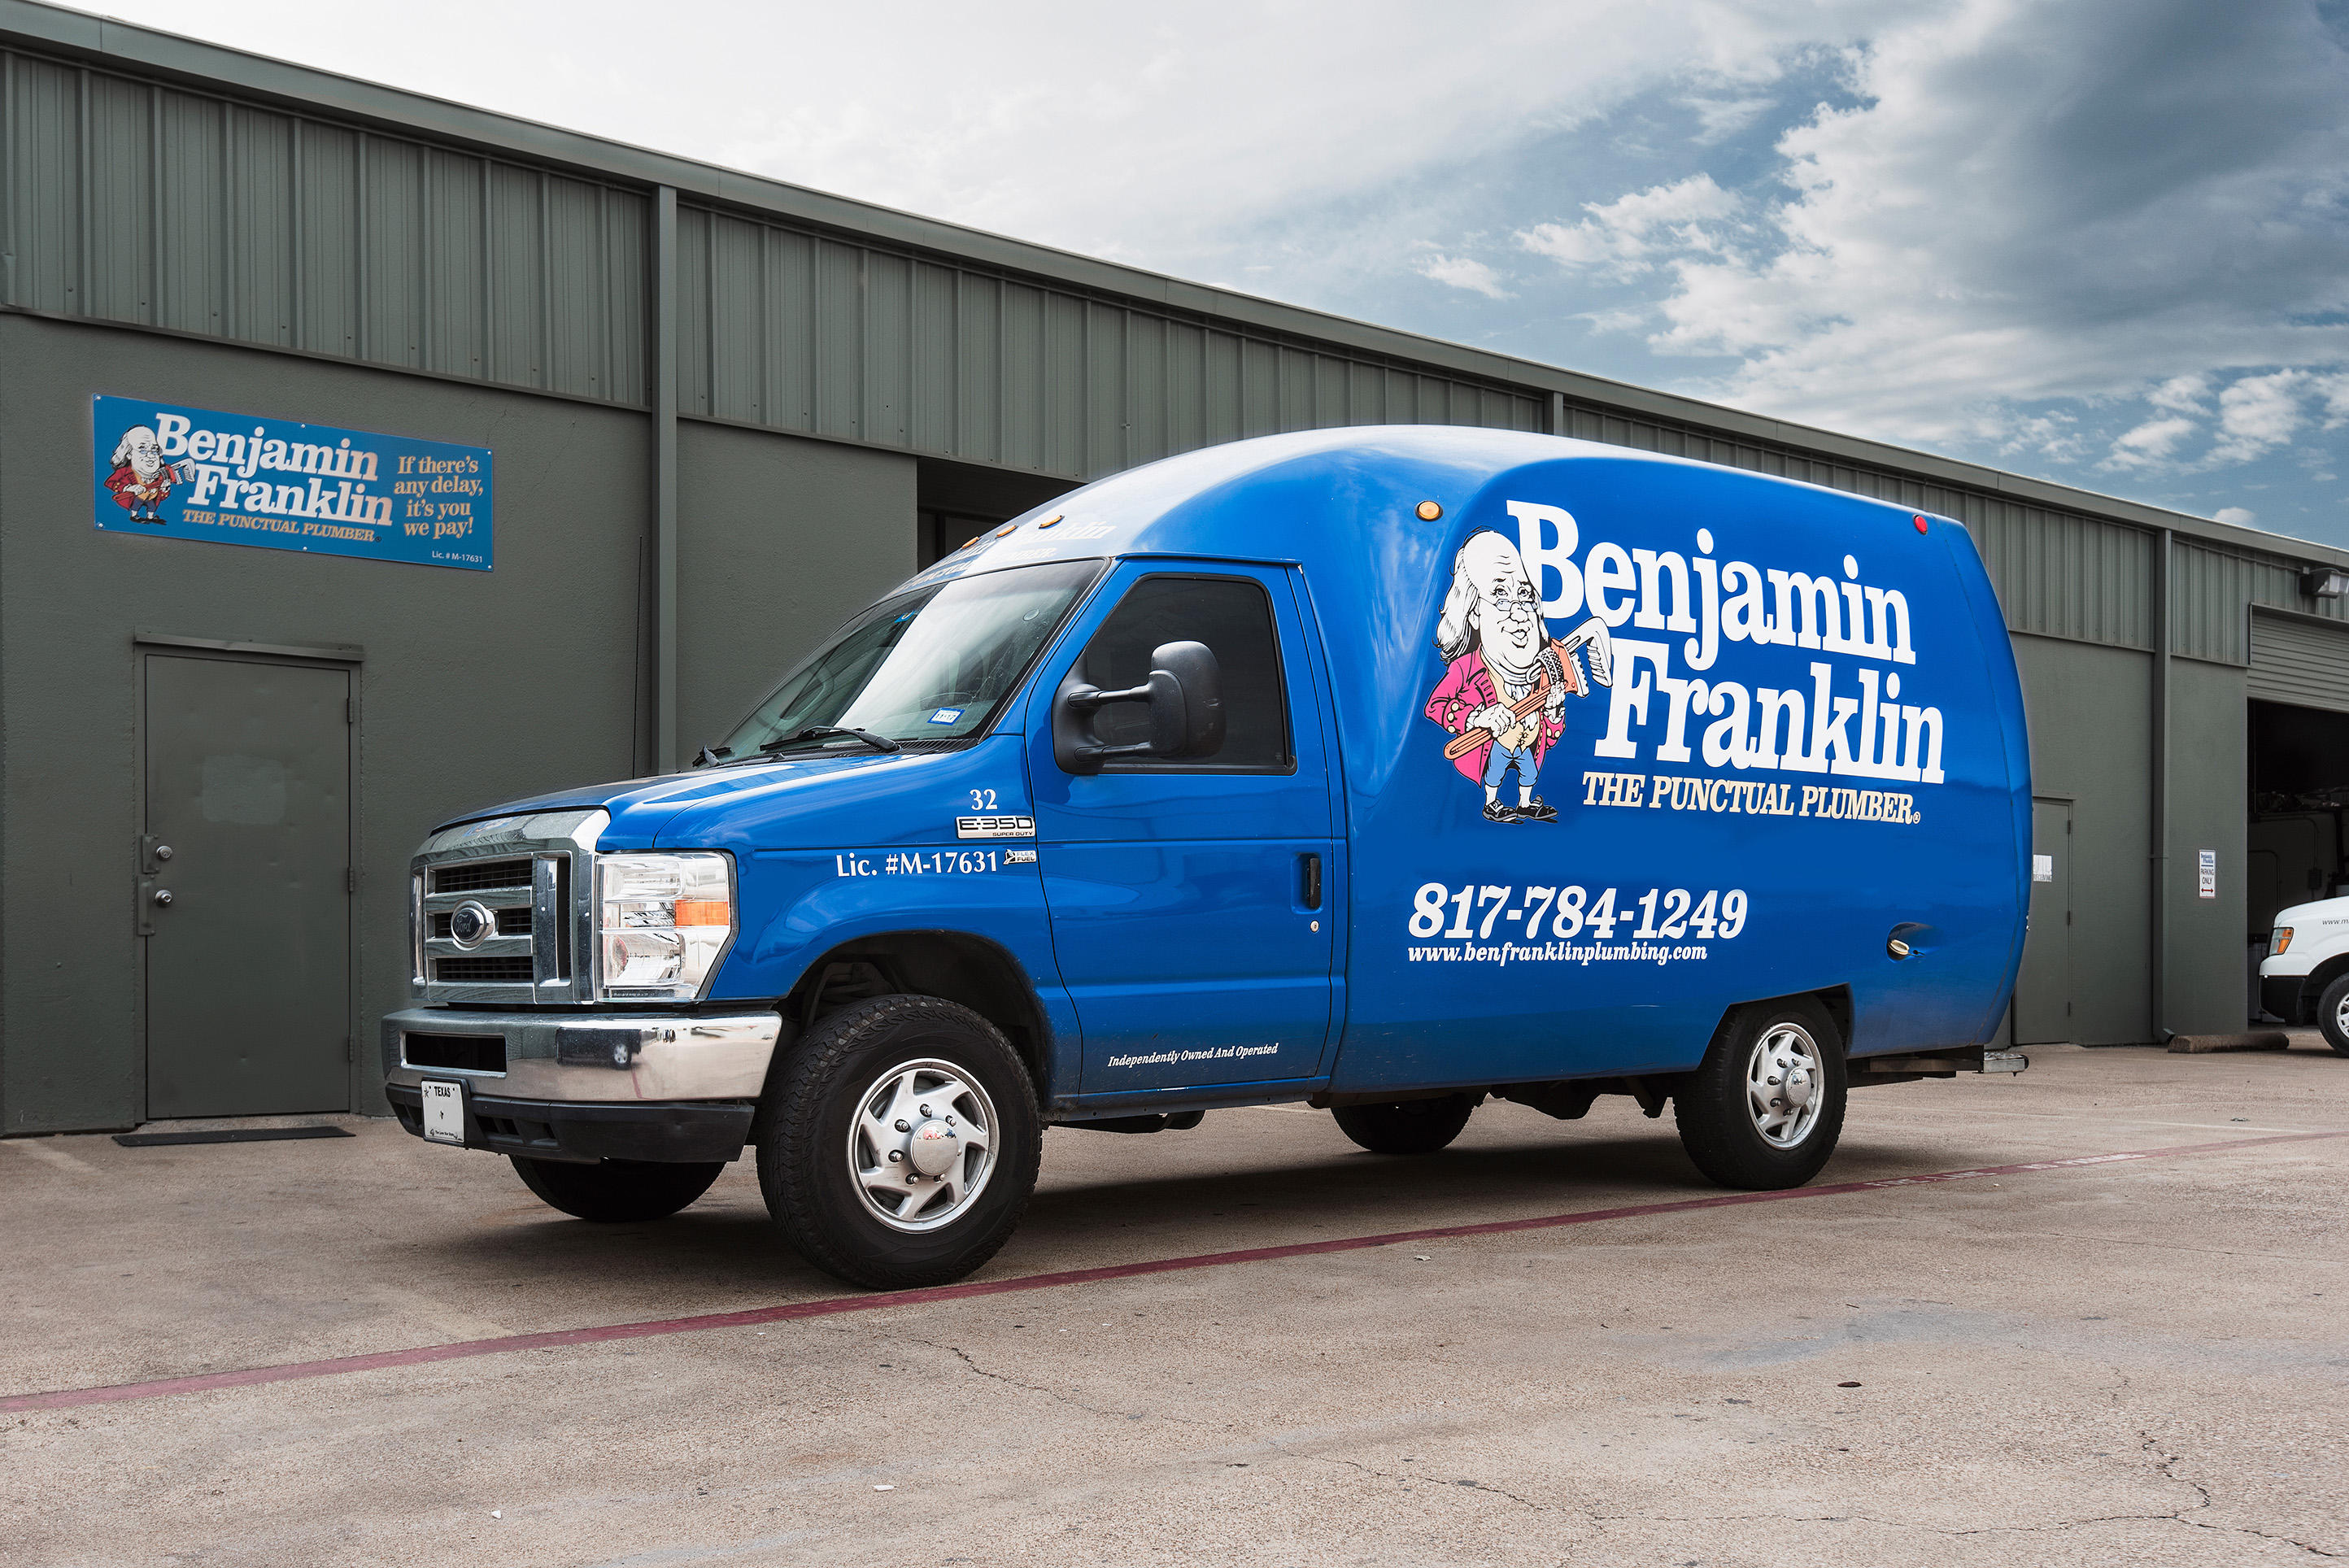 Benjamin Franklin Plumbing of Fort Worth & Arlington Texas area service vehicle.